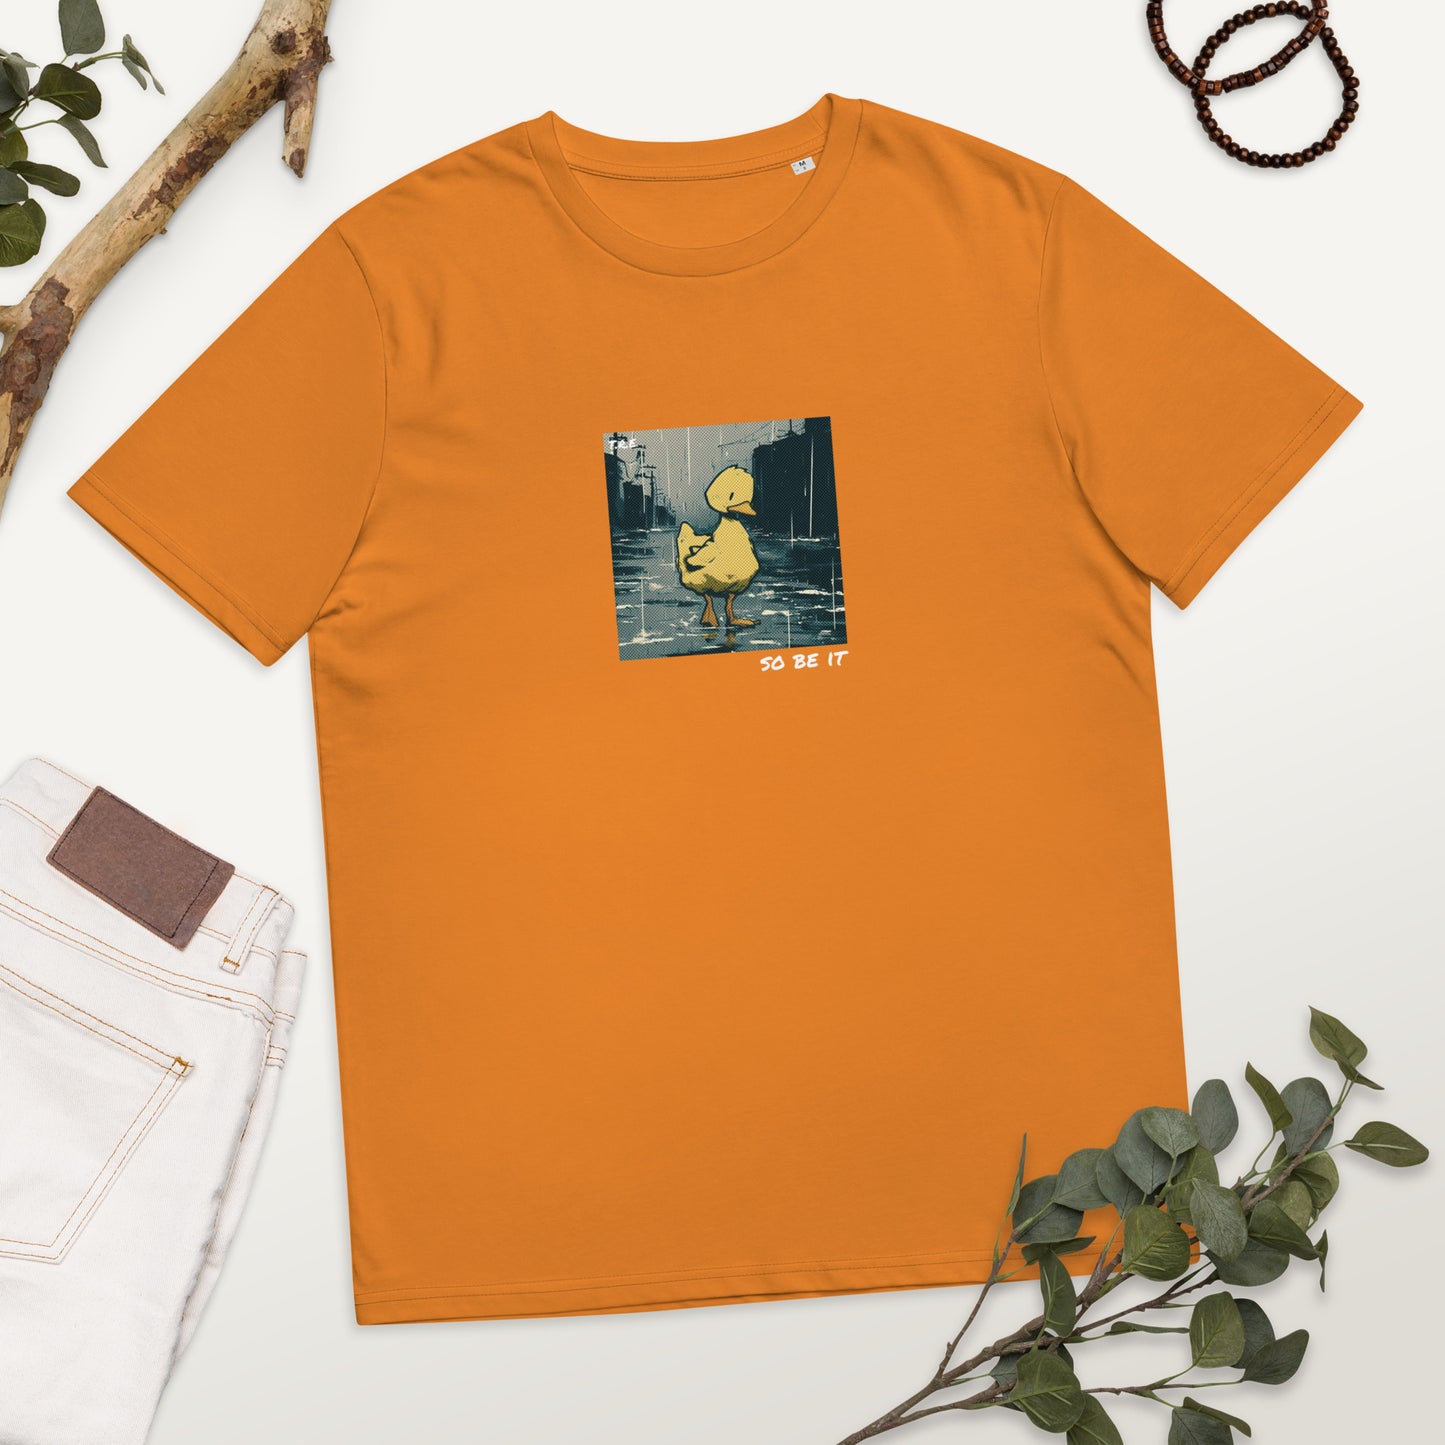 Unisex Organic Cotton T-Shirt - So Be It